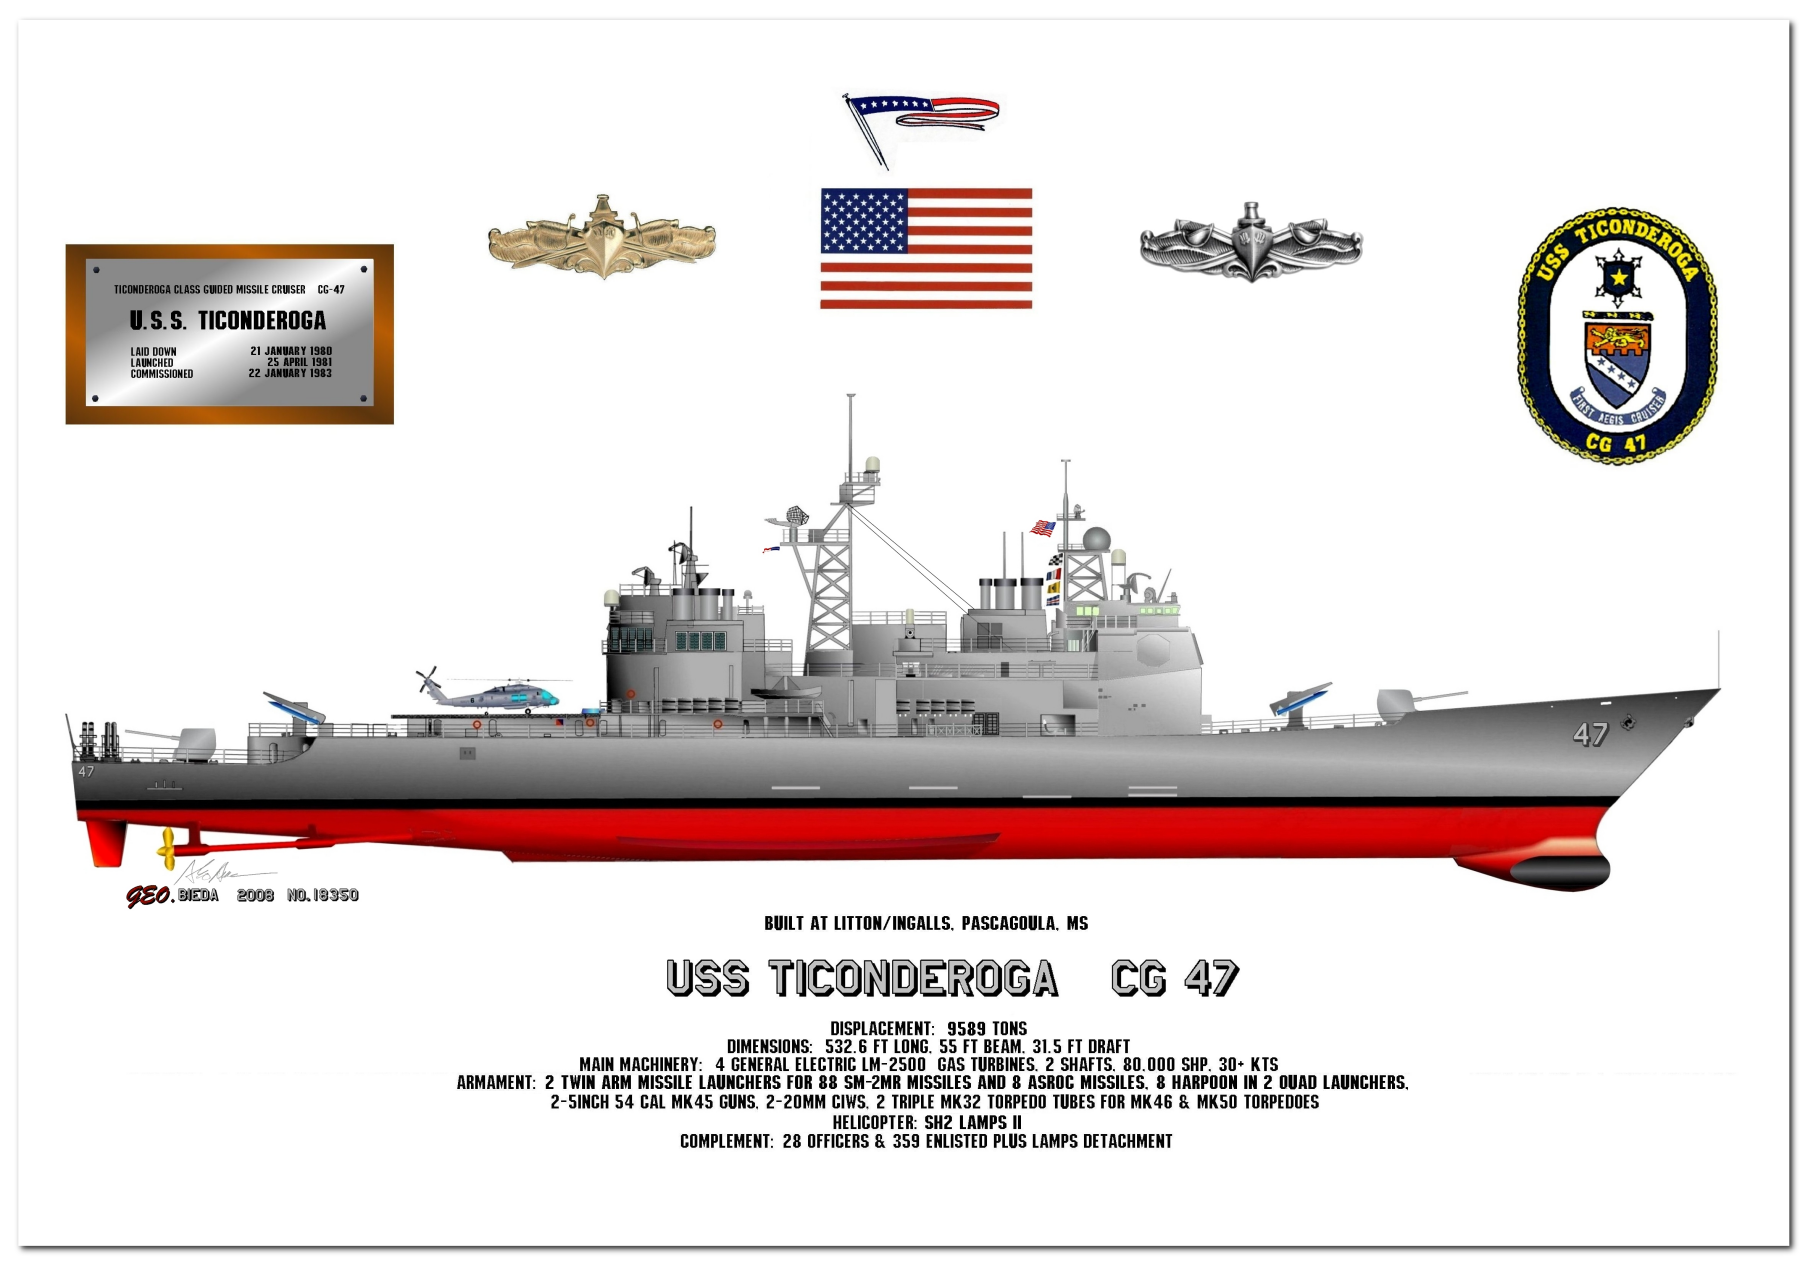 Ticonderoga Class Cruisers